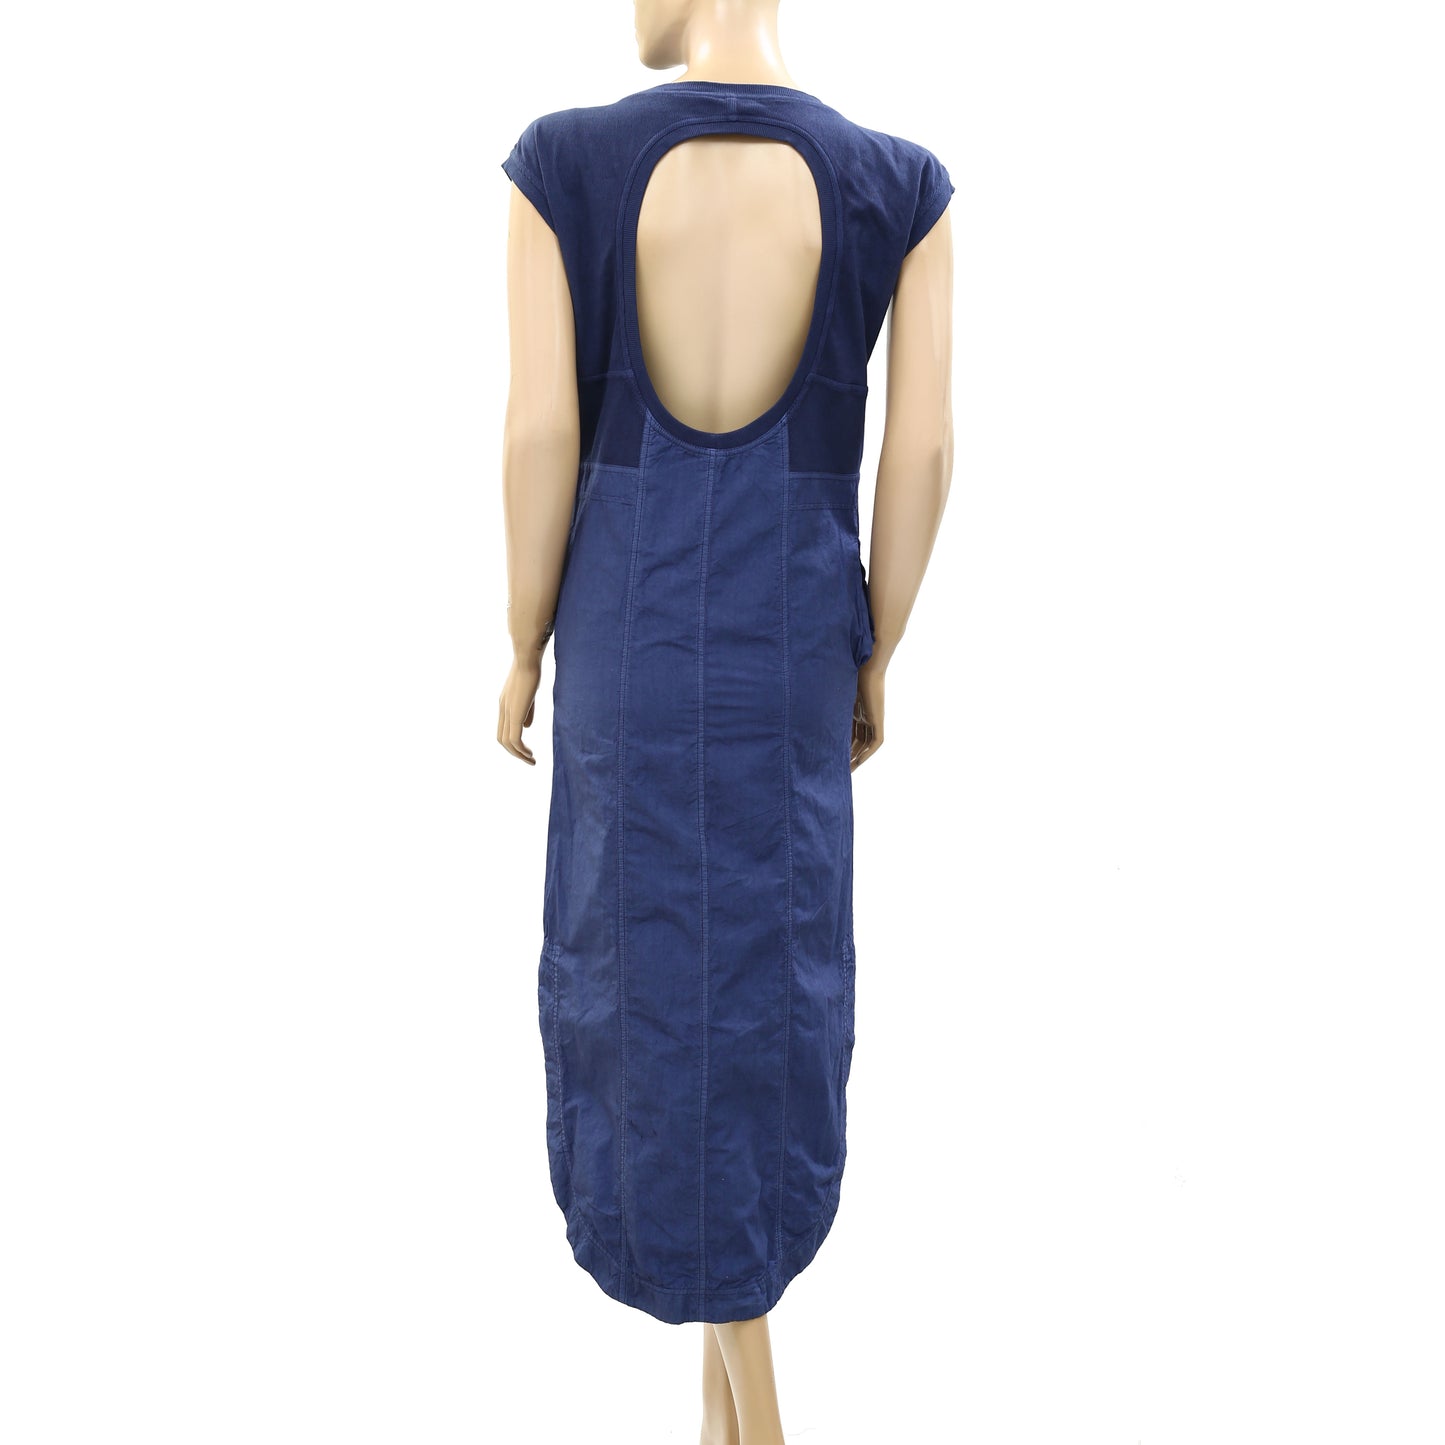 Daily Practice by Anthropologie Denim Cutout Midi Dress